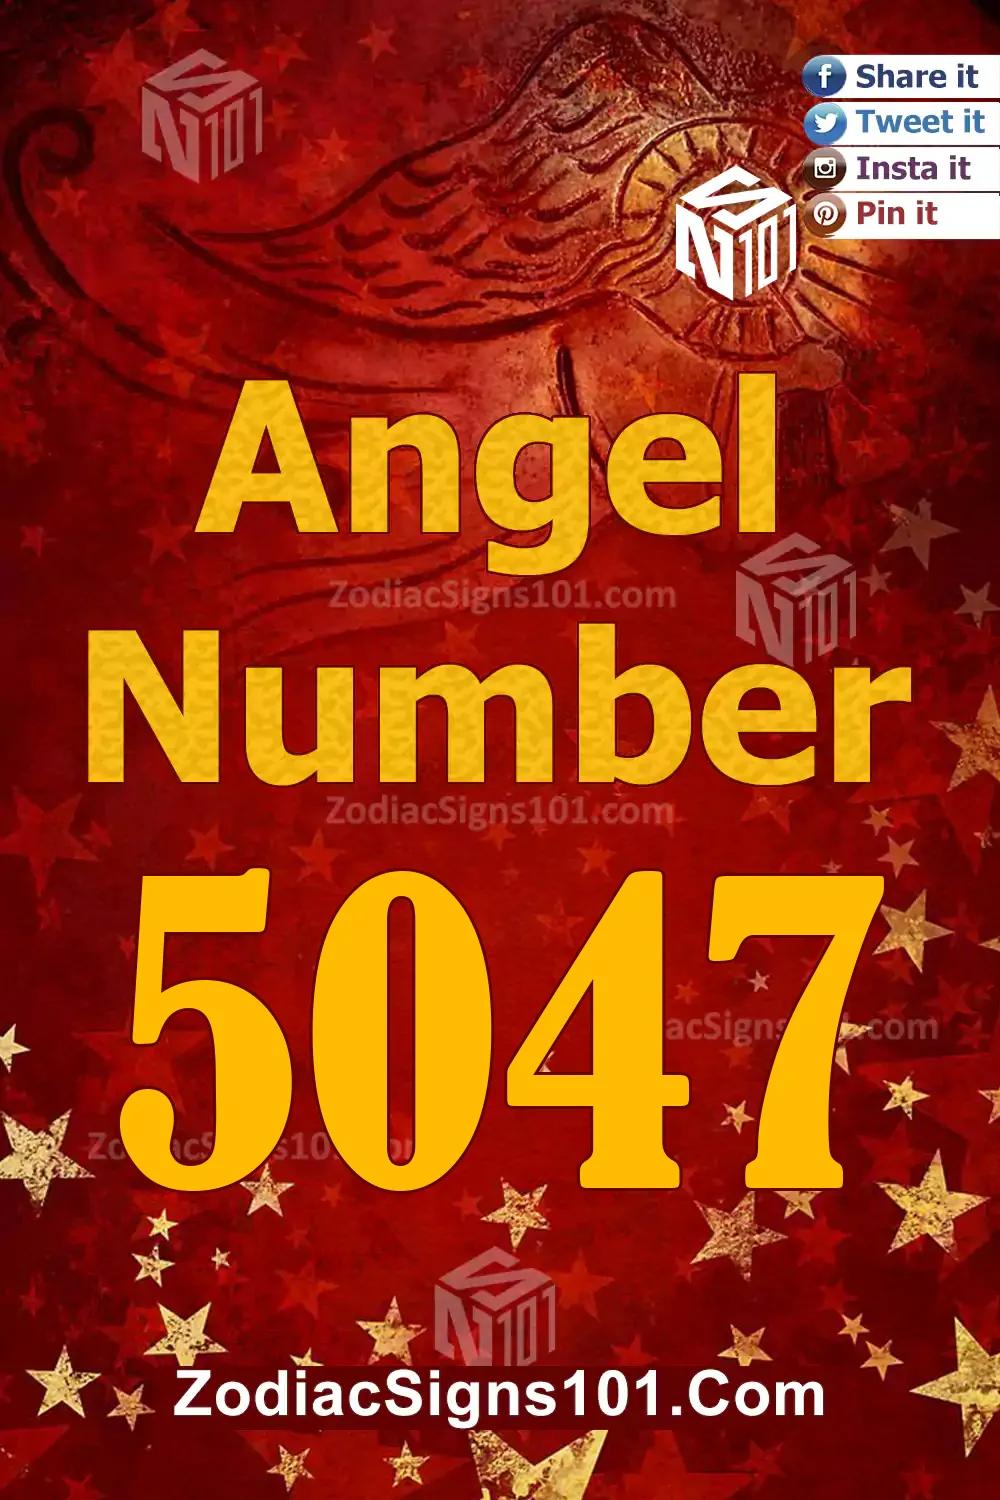 5047-Angel-Number-Meaning.jpg